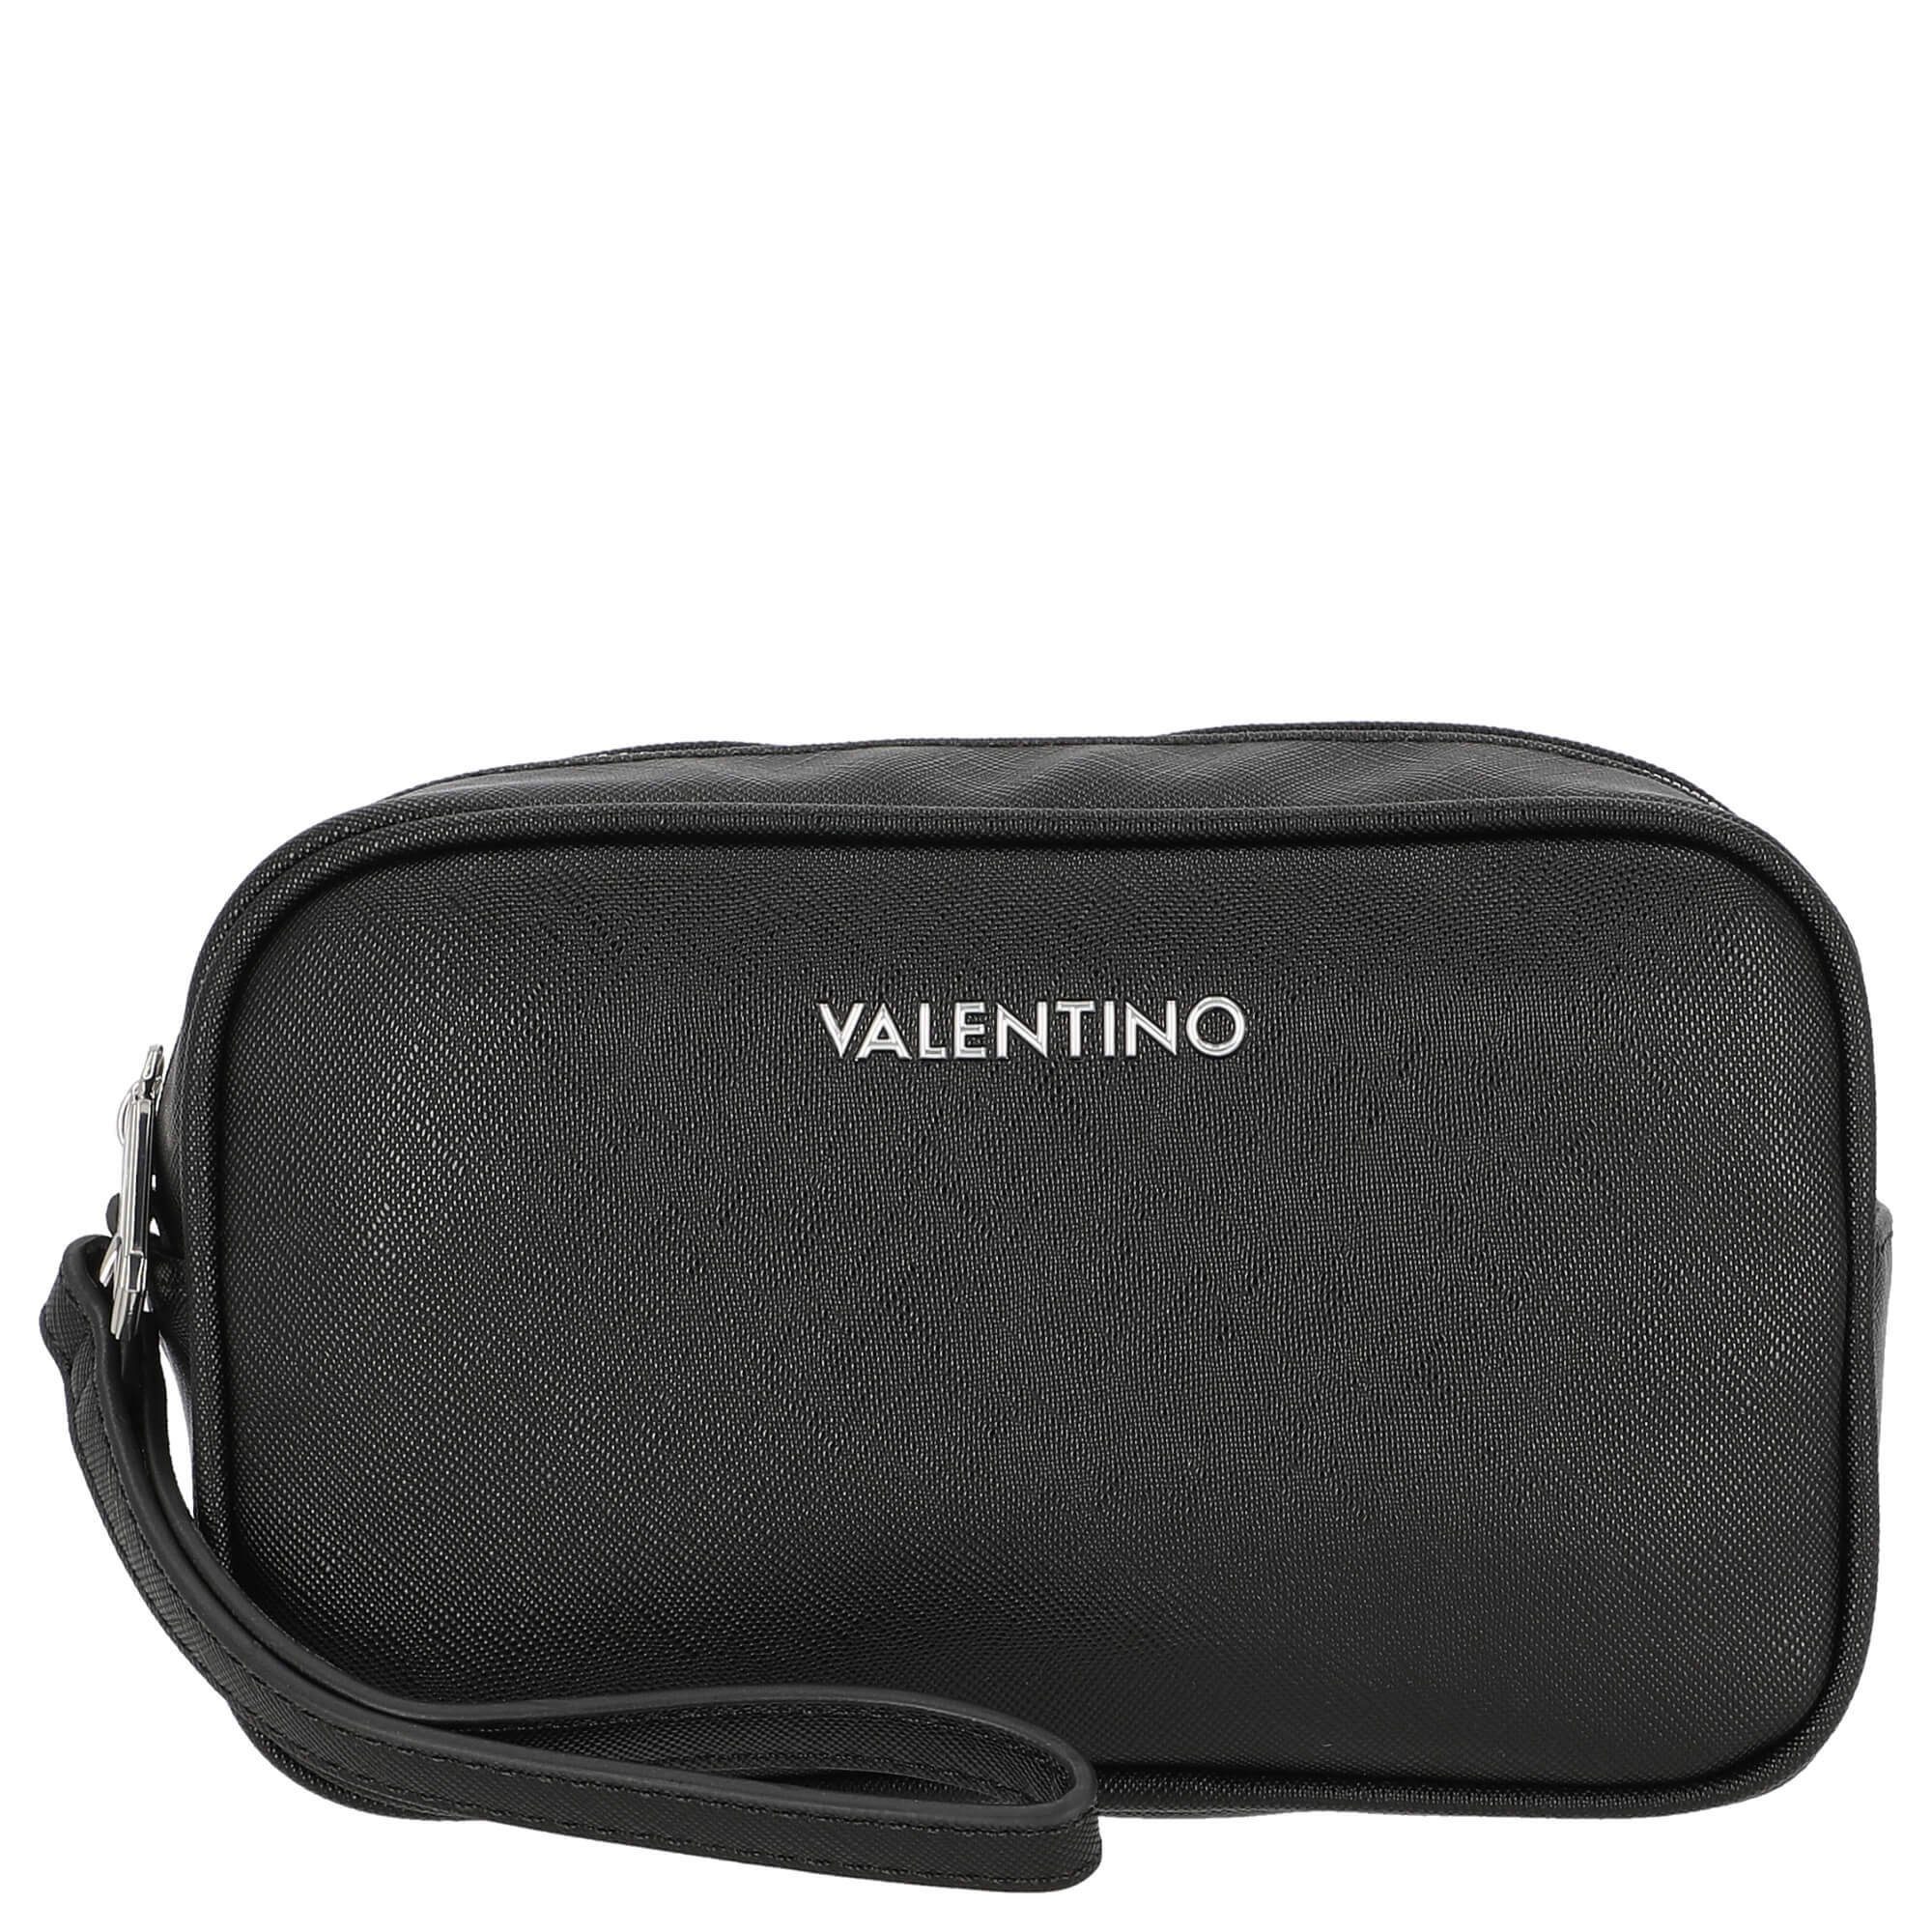 VALENTINO BAGS Beautycase - 19 Marnier Beautycase cm